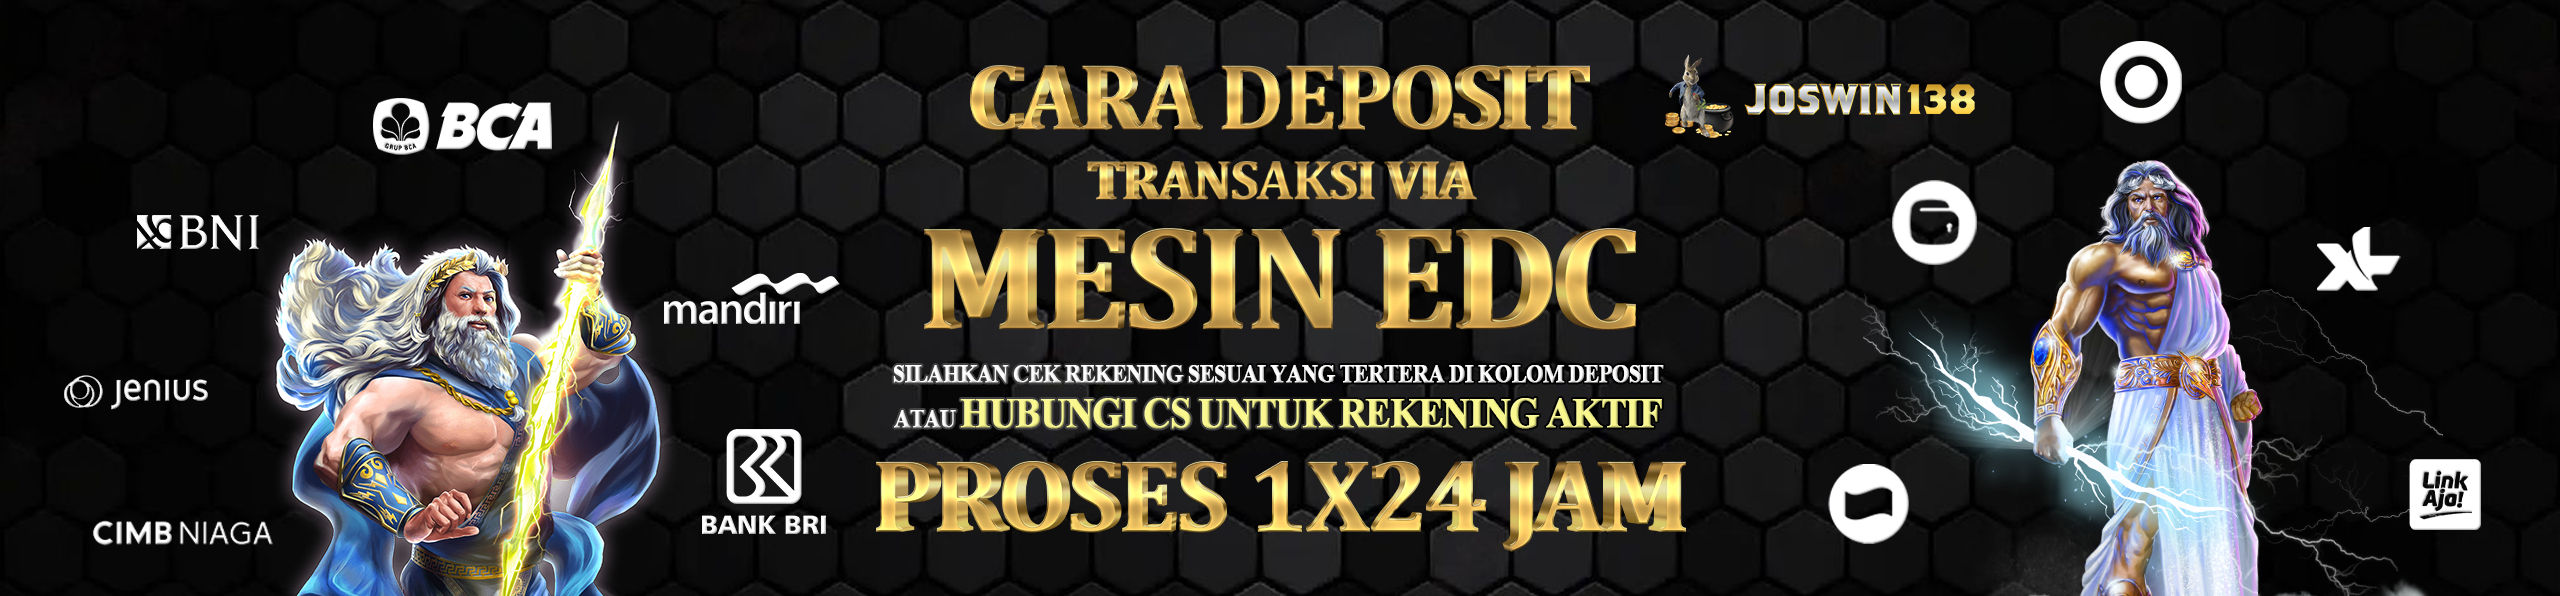 Deposit EDC Proses 1x24 Jam